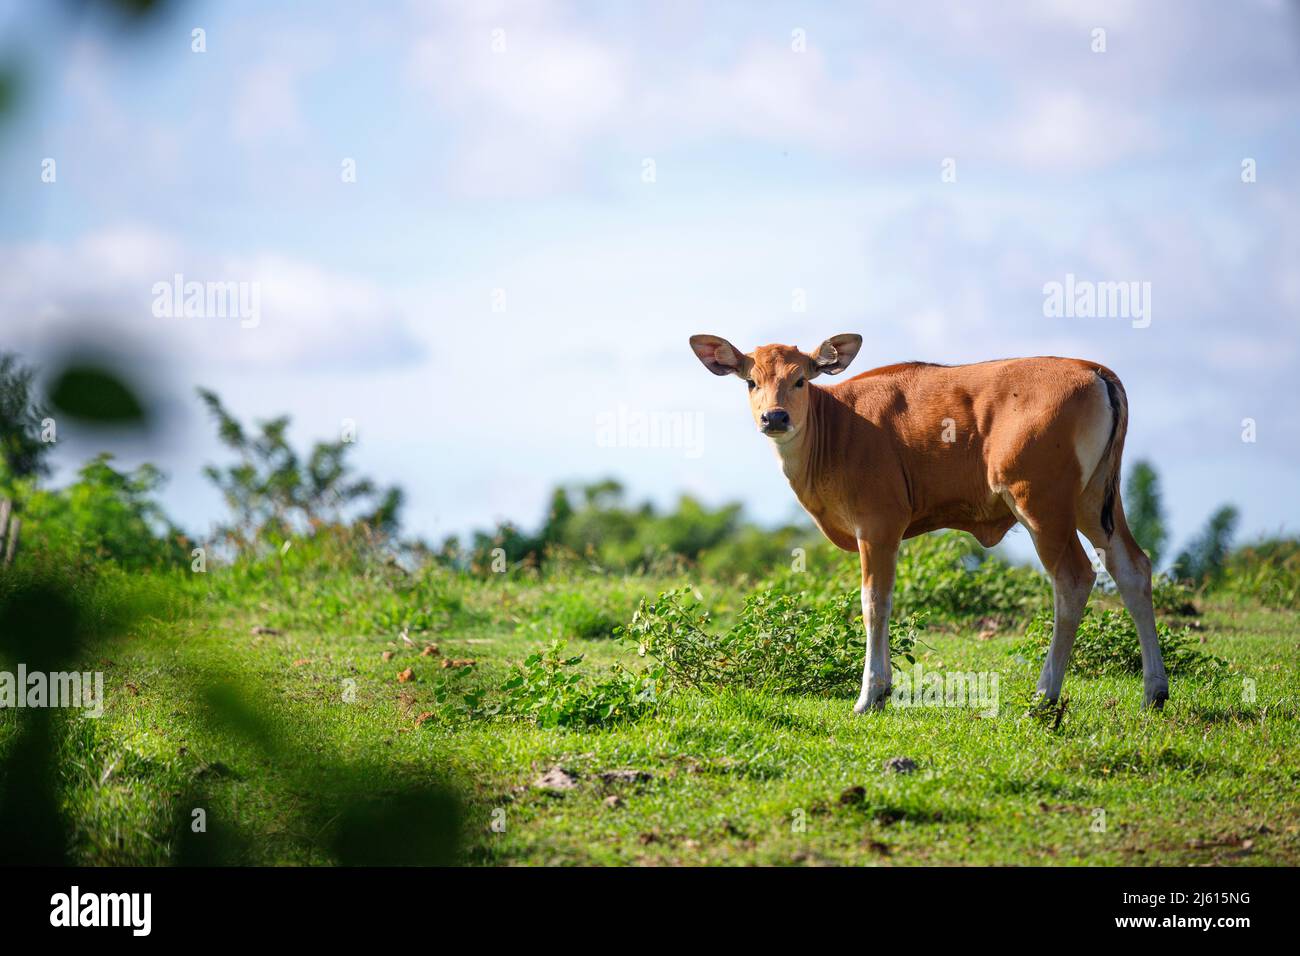 Little brown calf in a green field Stock Photo